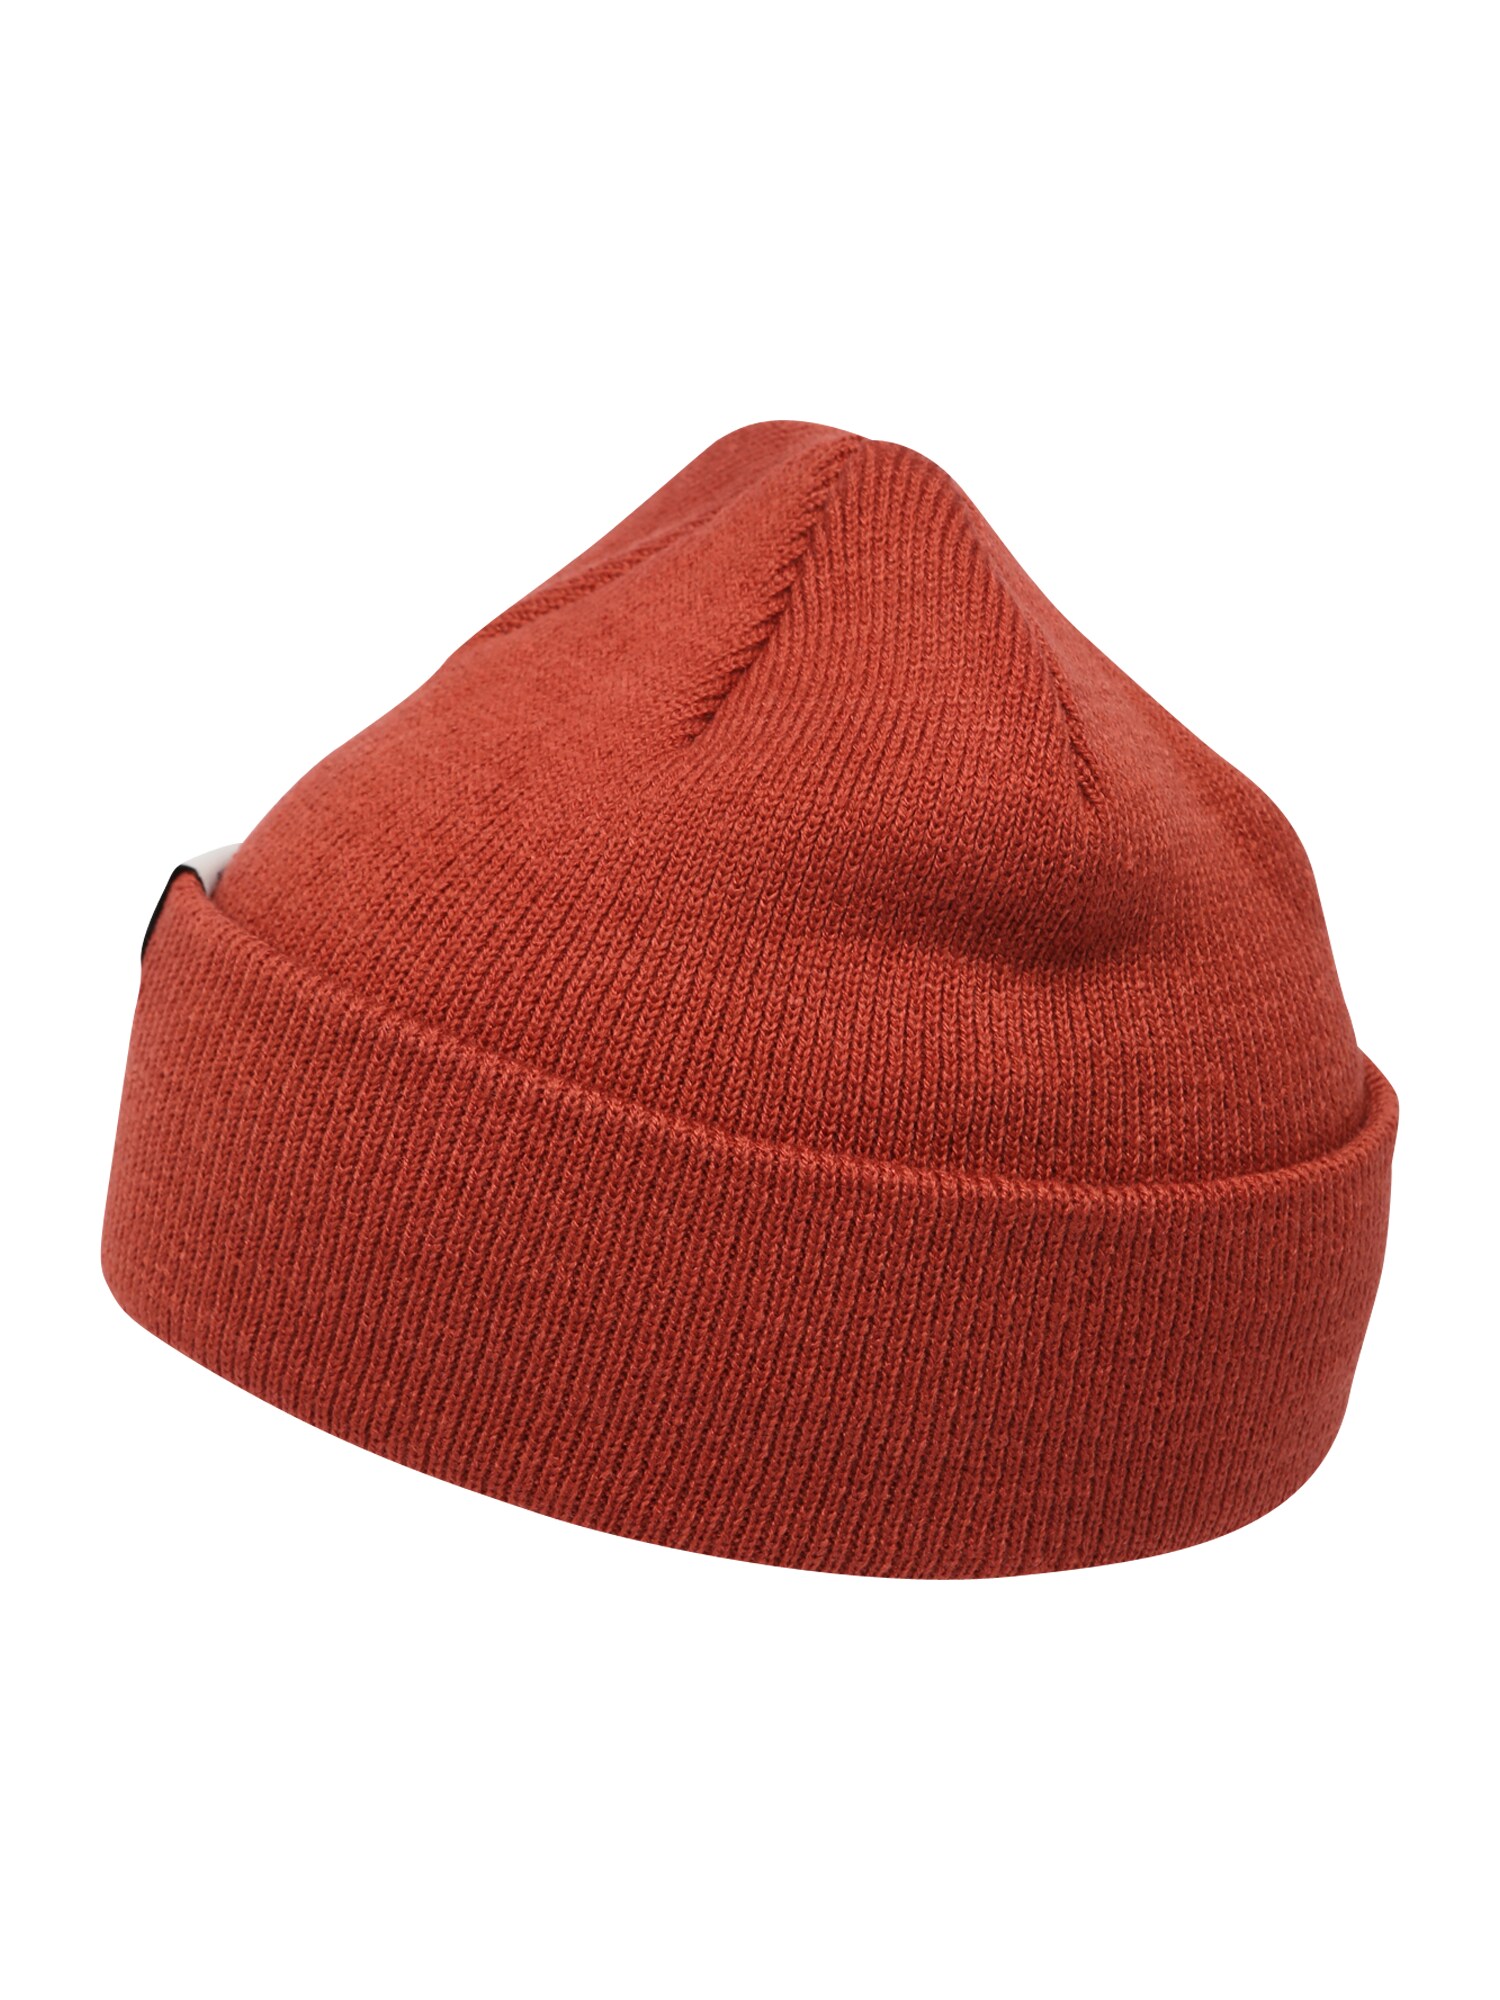 Coal Megzta kepurė 'The Uniform' rūdžių raudona